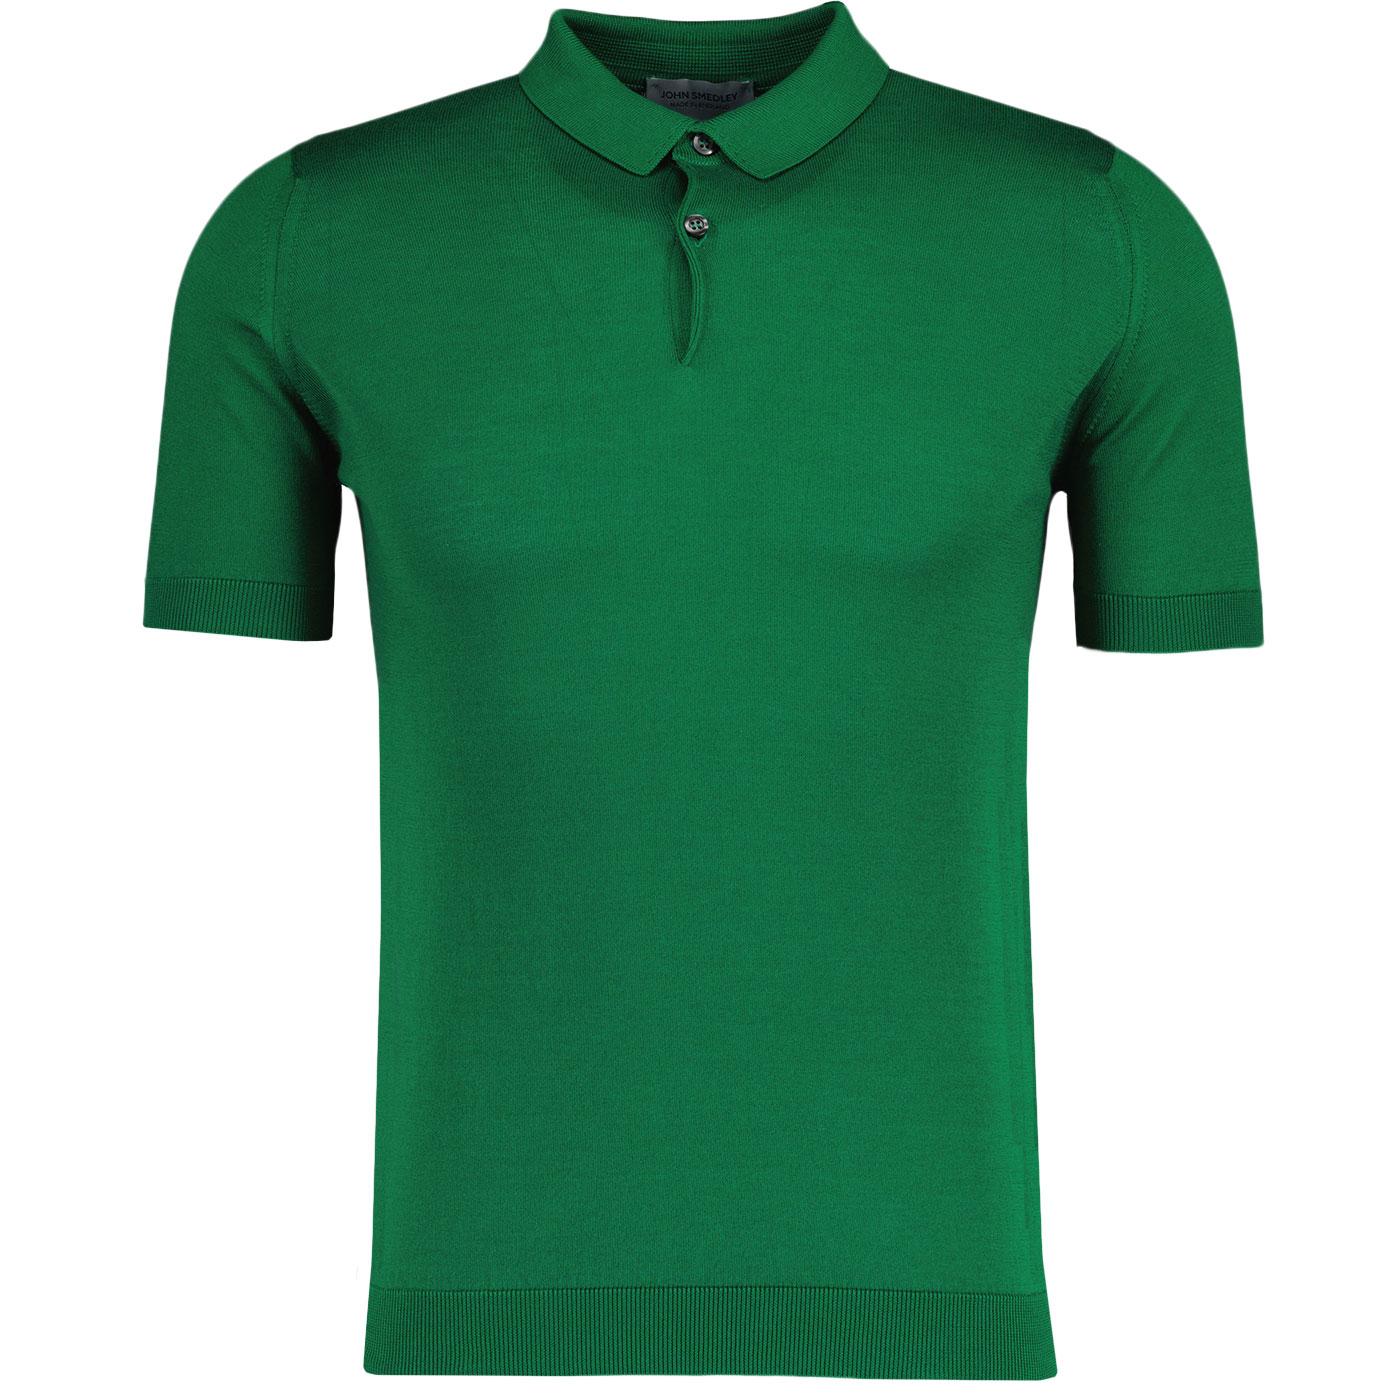 Rhodes John Smedley Knitted Retro Polo Shirt Green